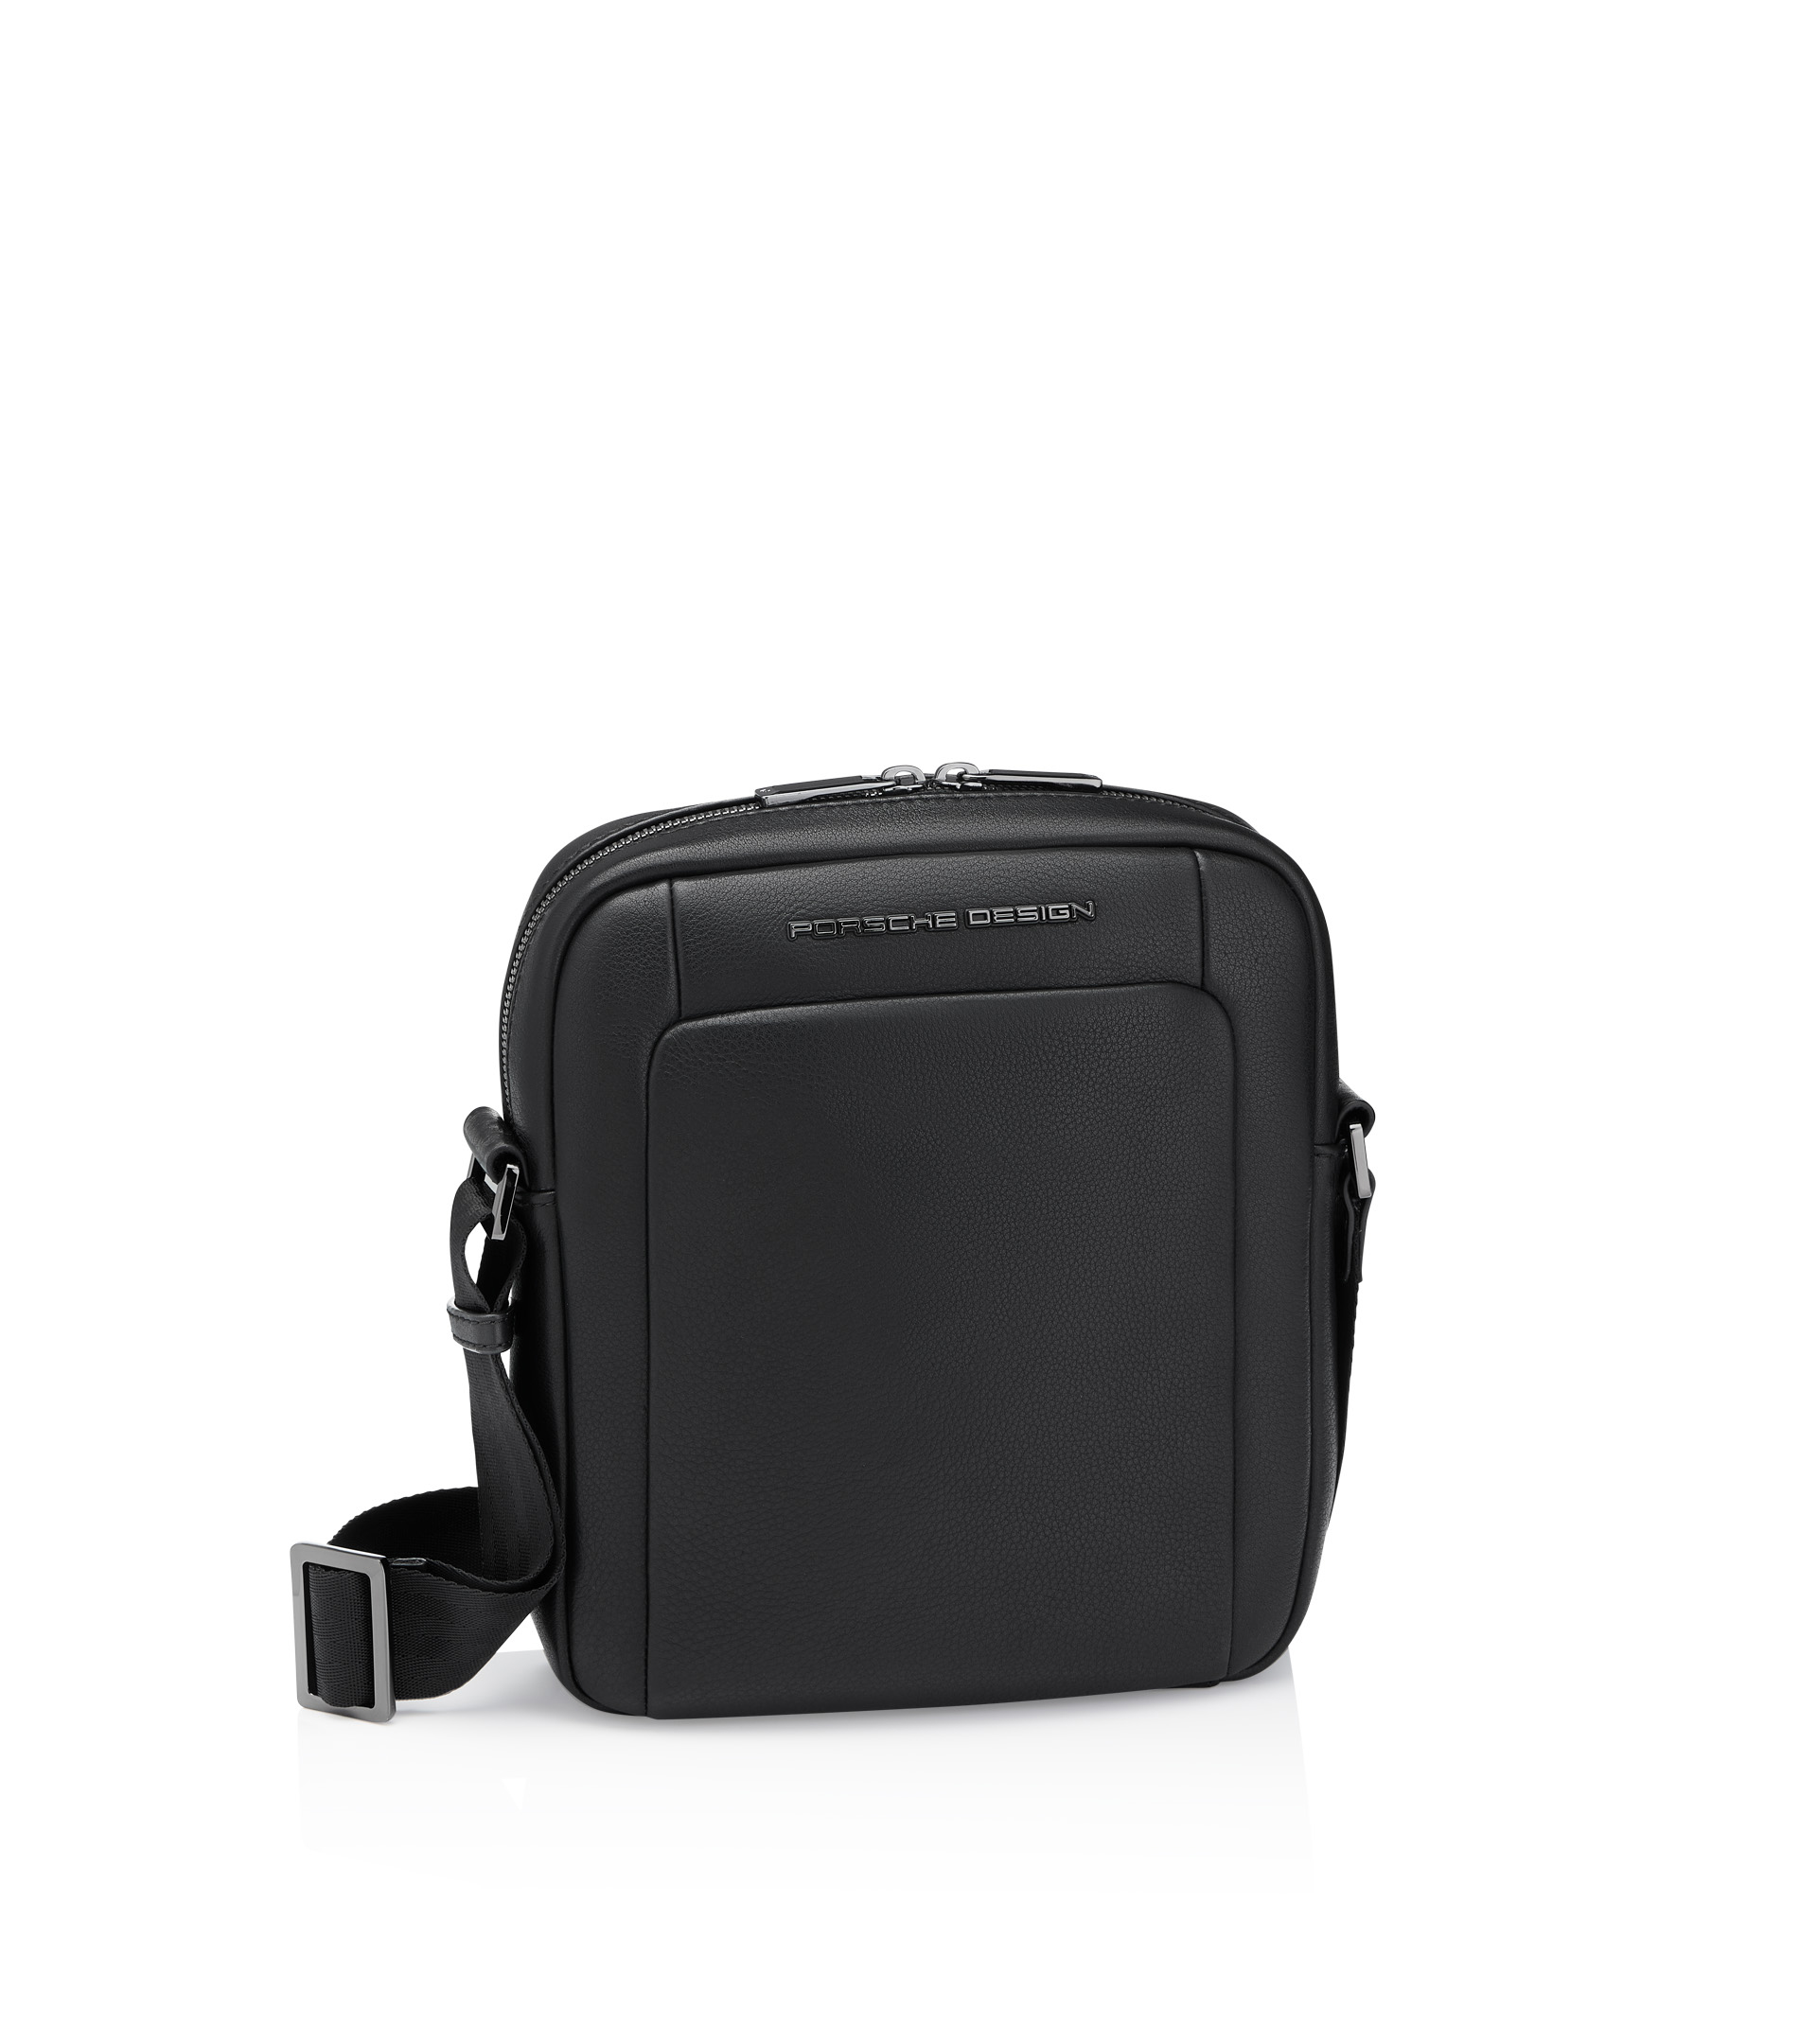 PORSCHE DESIGN Top Handle Bag Shoulder Bag business A4 size